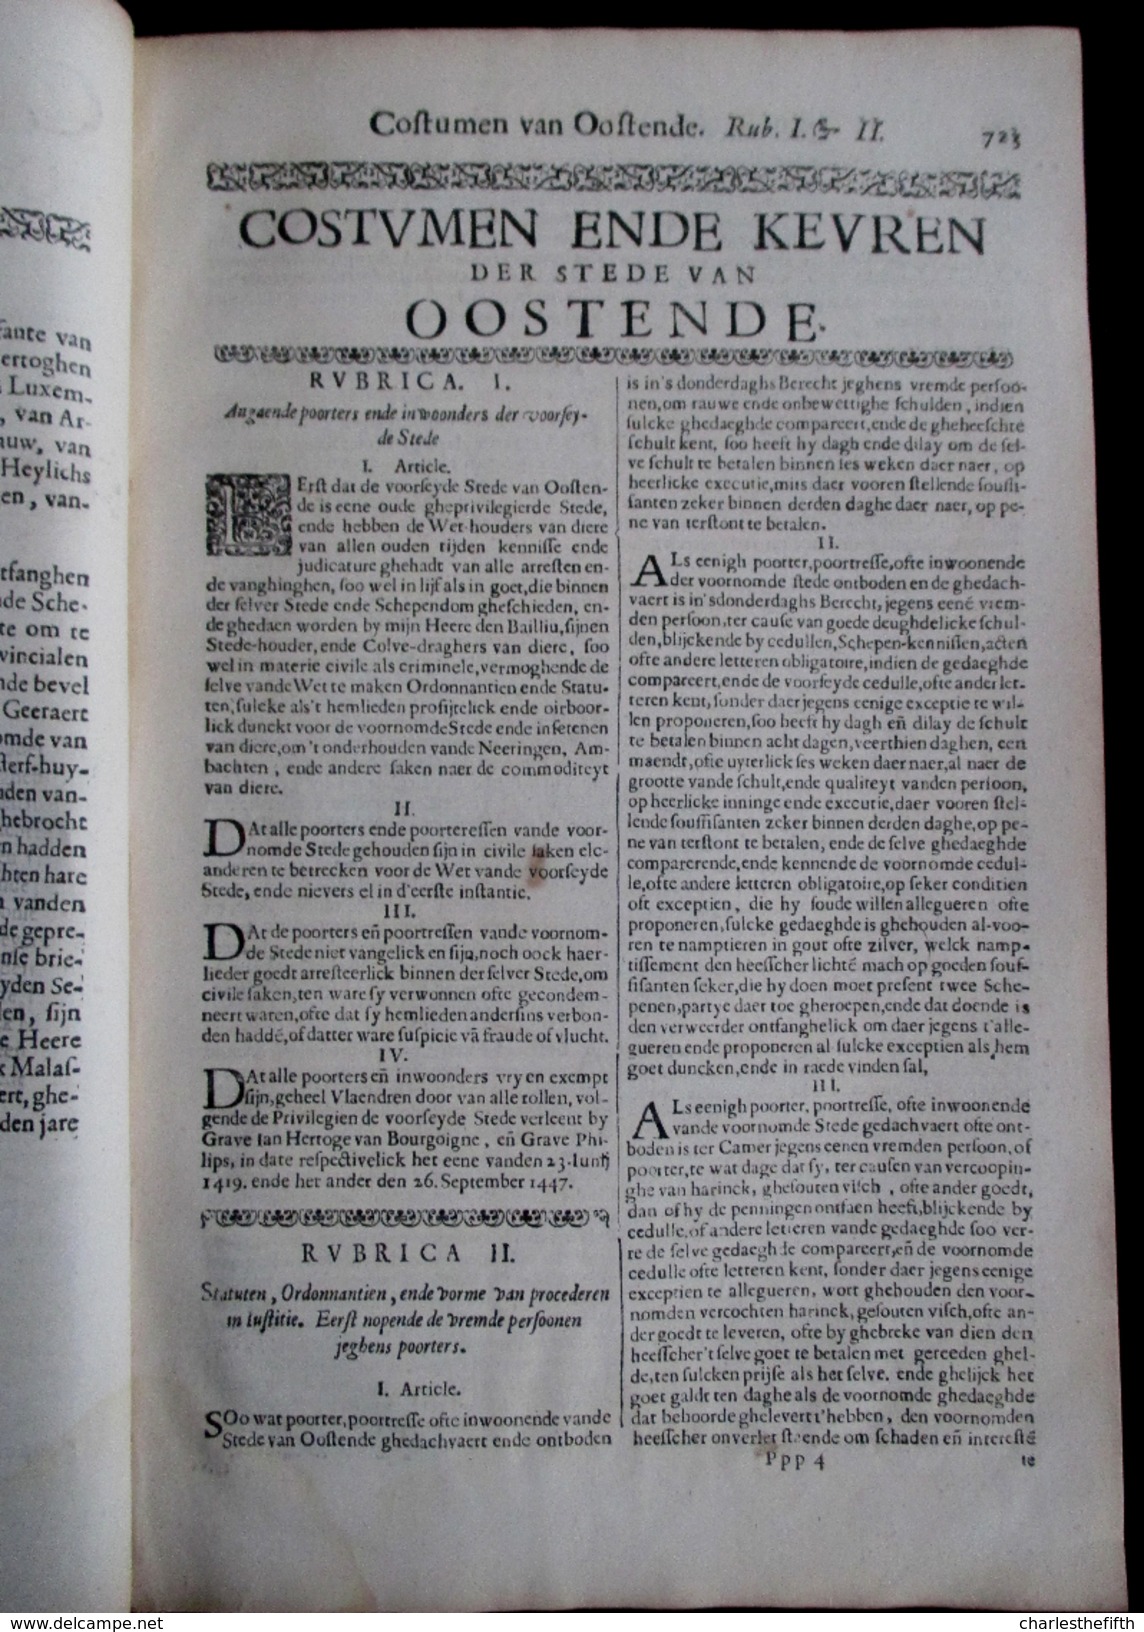 COSTUMEN ENDE KEUREN DER STEDE VAN OOSTENDE By MICHIEL KNOBBAERT ( Volledig Deel Over Oostende ) Herdruckt  't Jaer 1674 - Antiguos